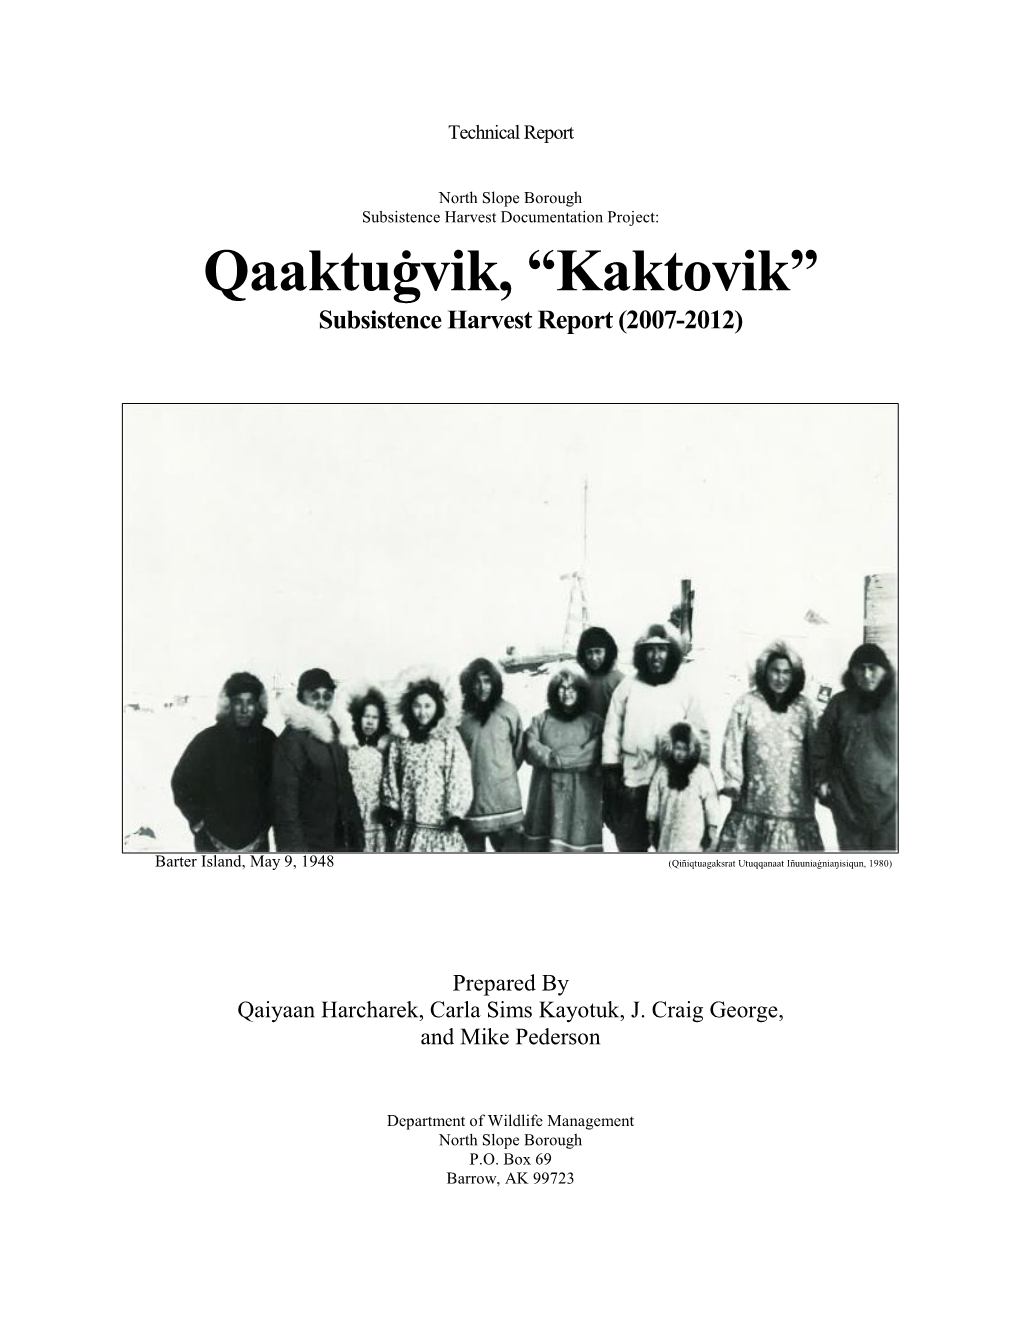 Kaktovik” Subsistence Harvest Report (2007-2012)